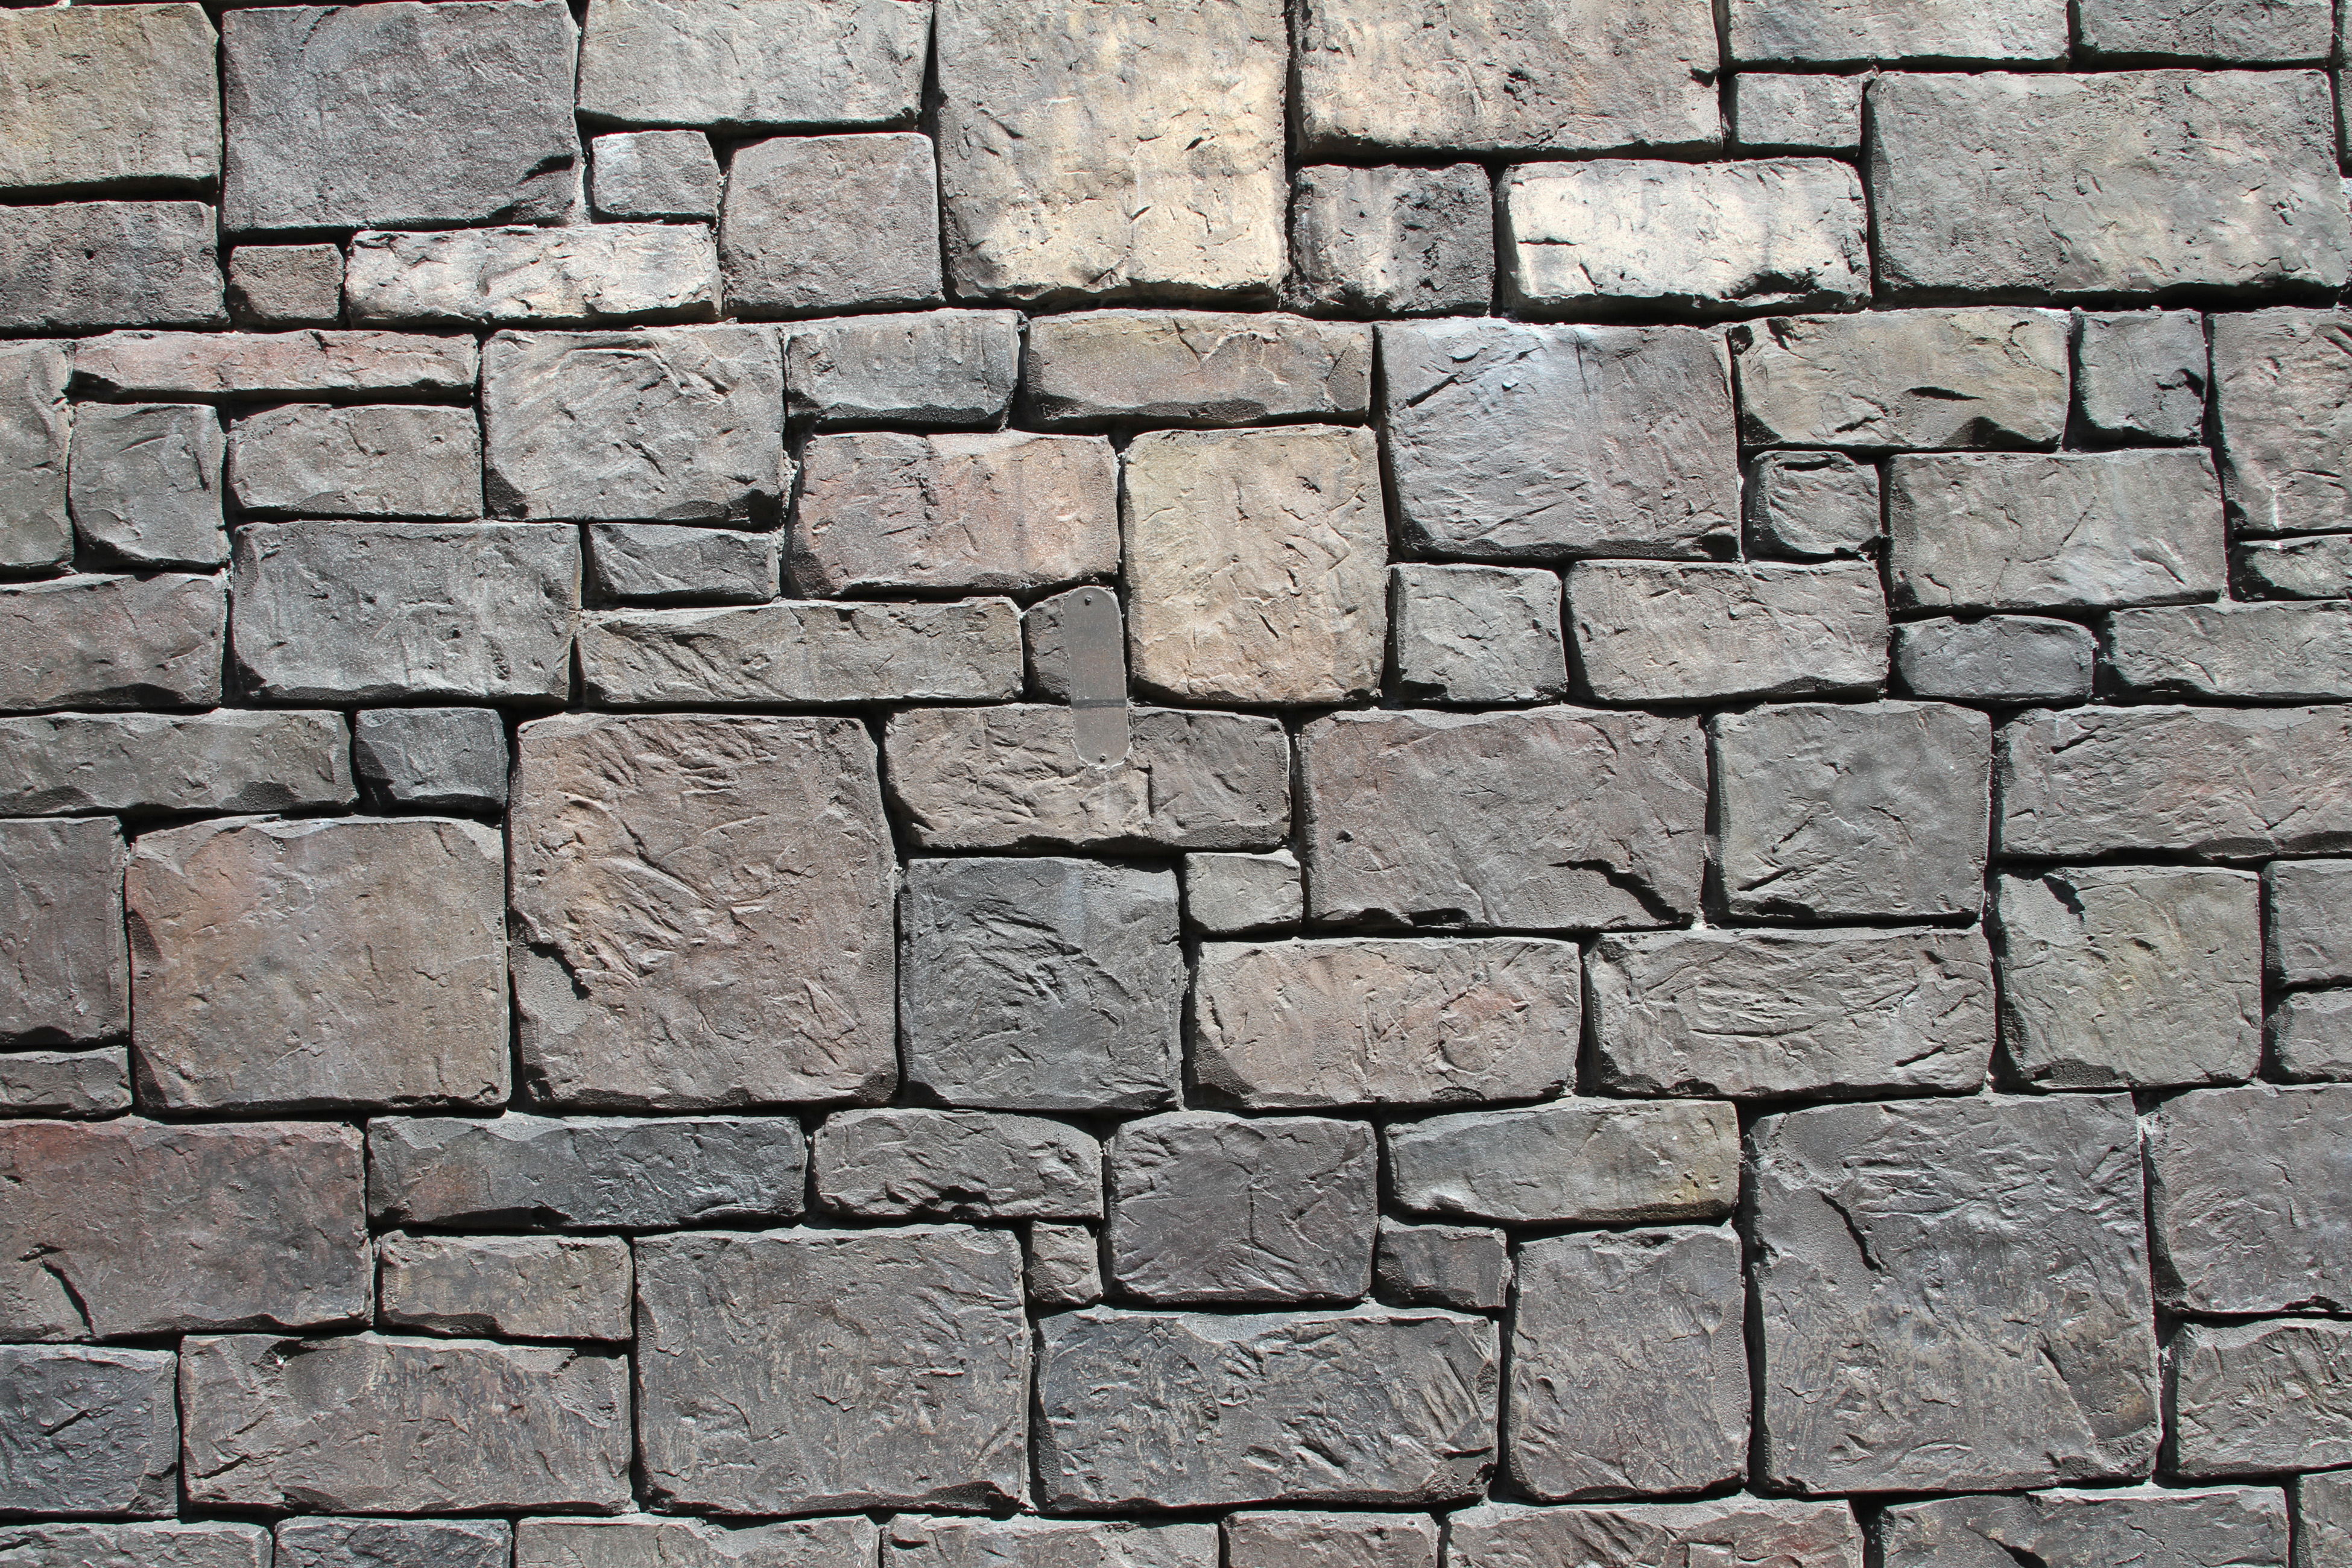 castle brick wallpaper,brickwork,wall,stone wall,brick,cobblestone